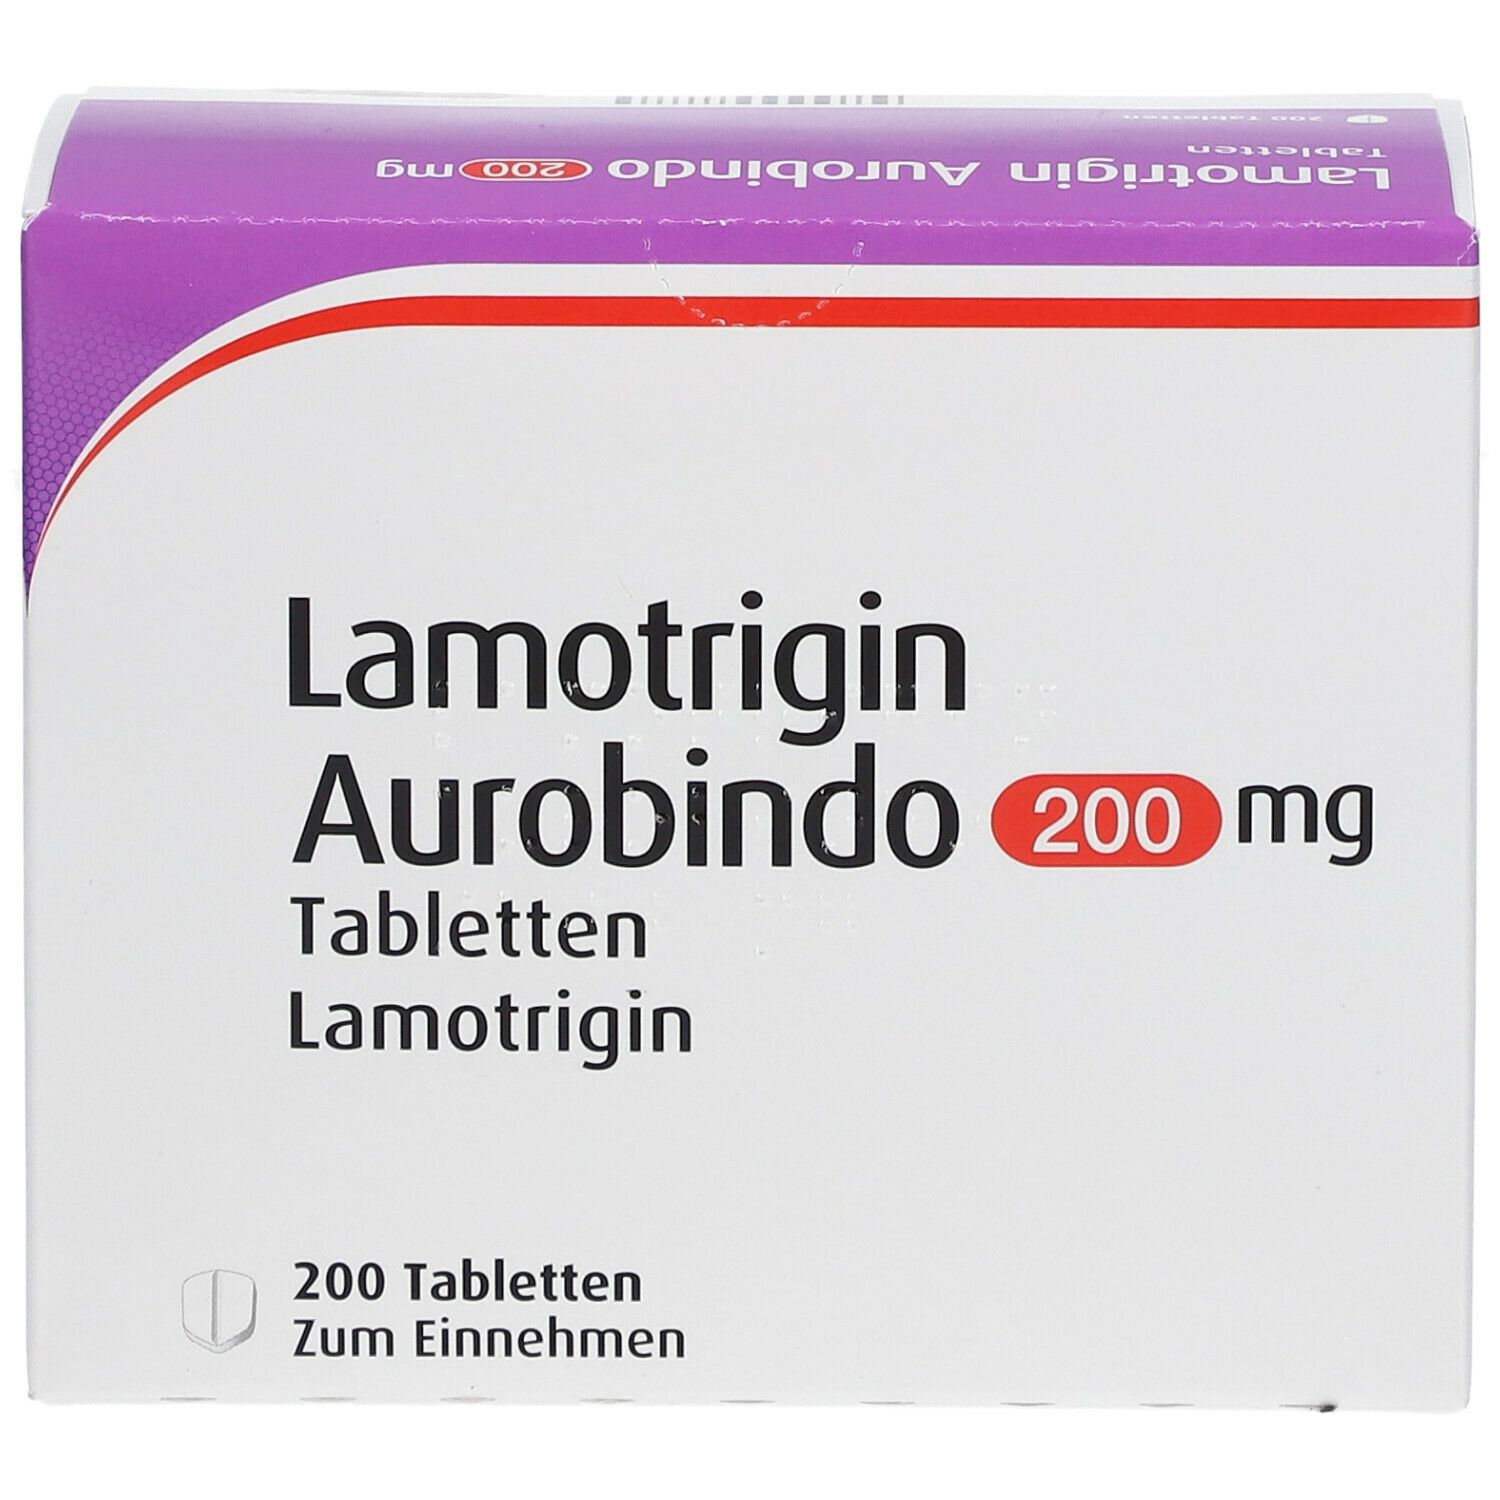 Lamotrigin Aurobindo 200 mg